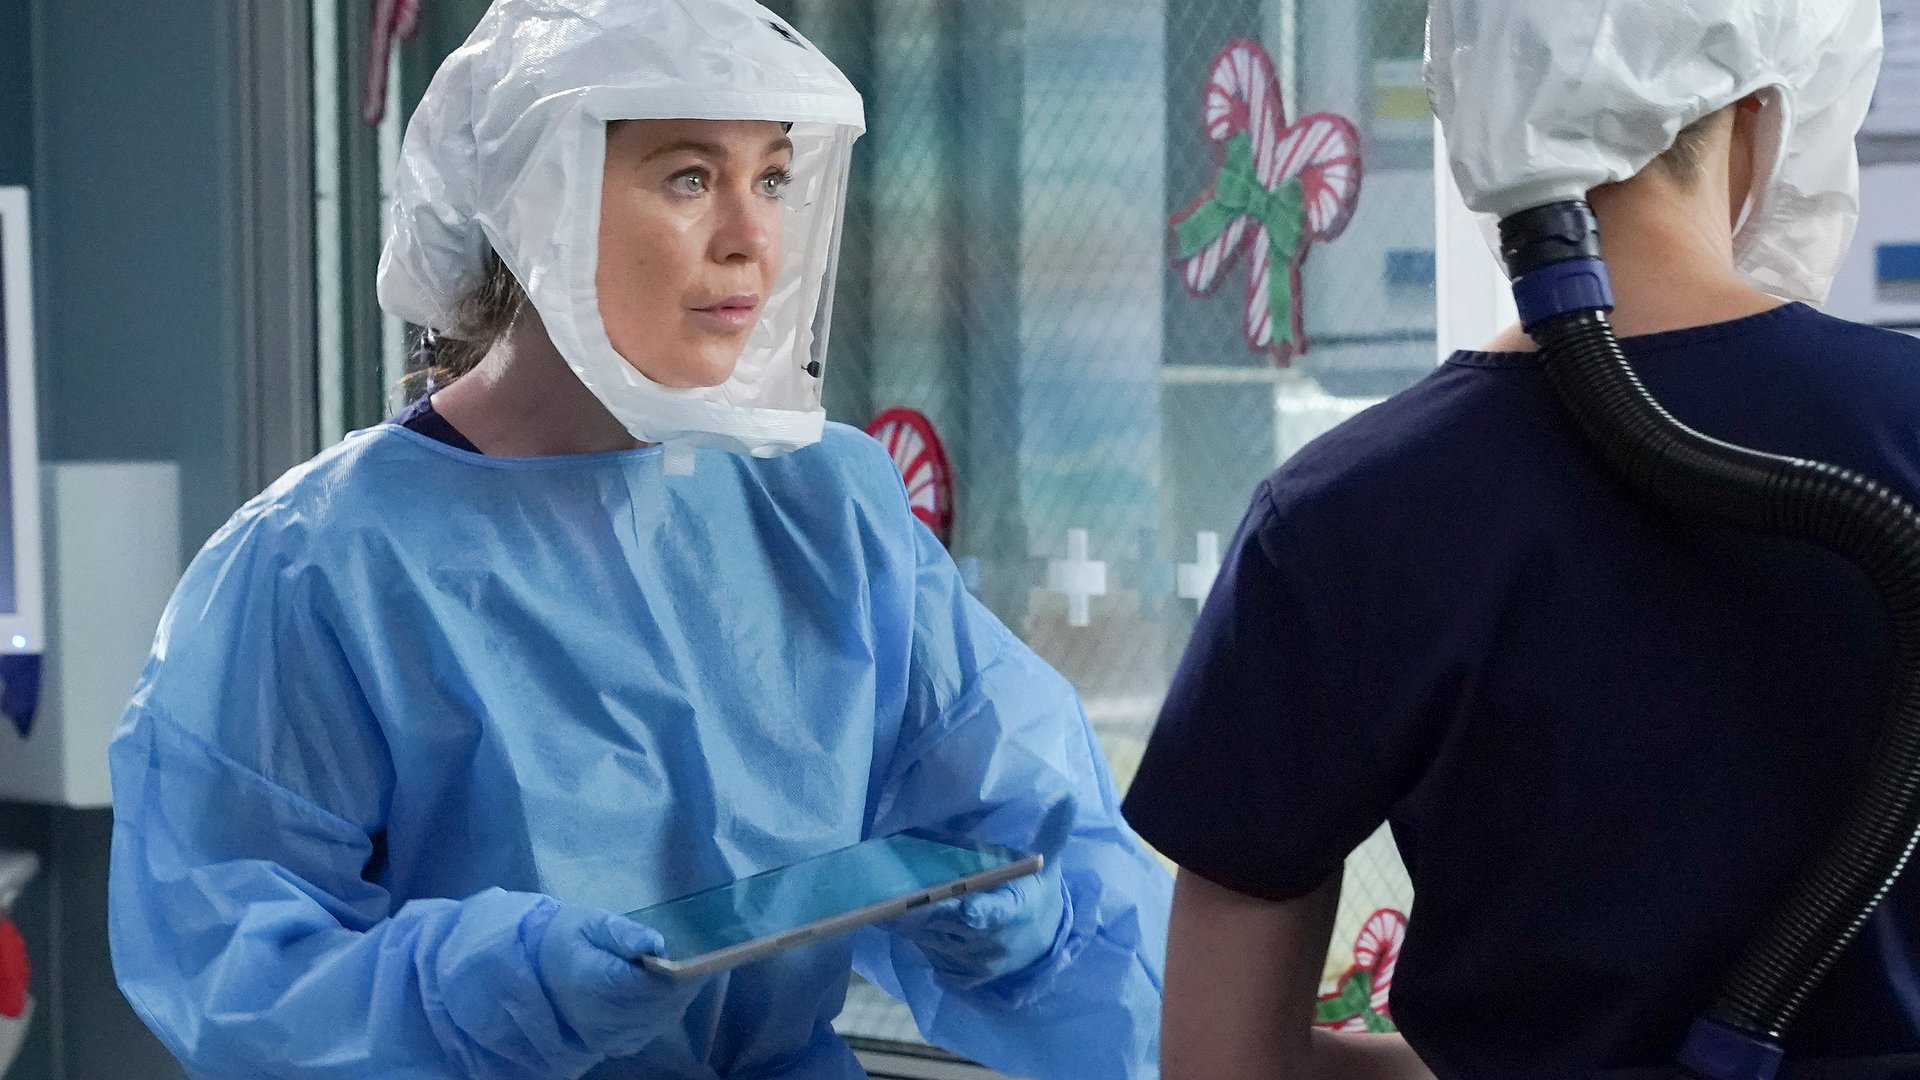 Ellen Pompeo as Meredith Grey looks surprised in ‘Grey’s Anatomy’ Season 17 Episode 17, ‘Someone Saved My Life Tonight.’